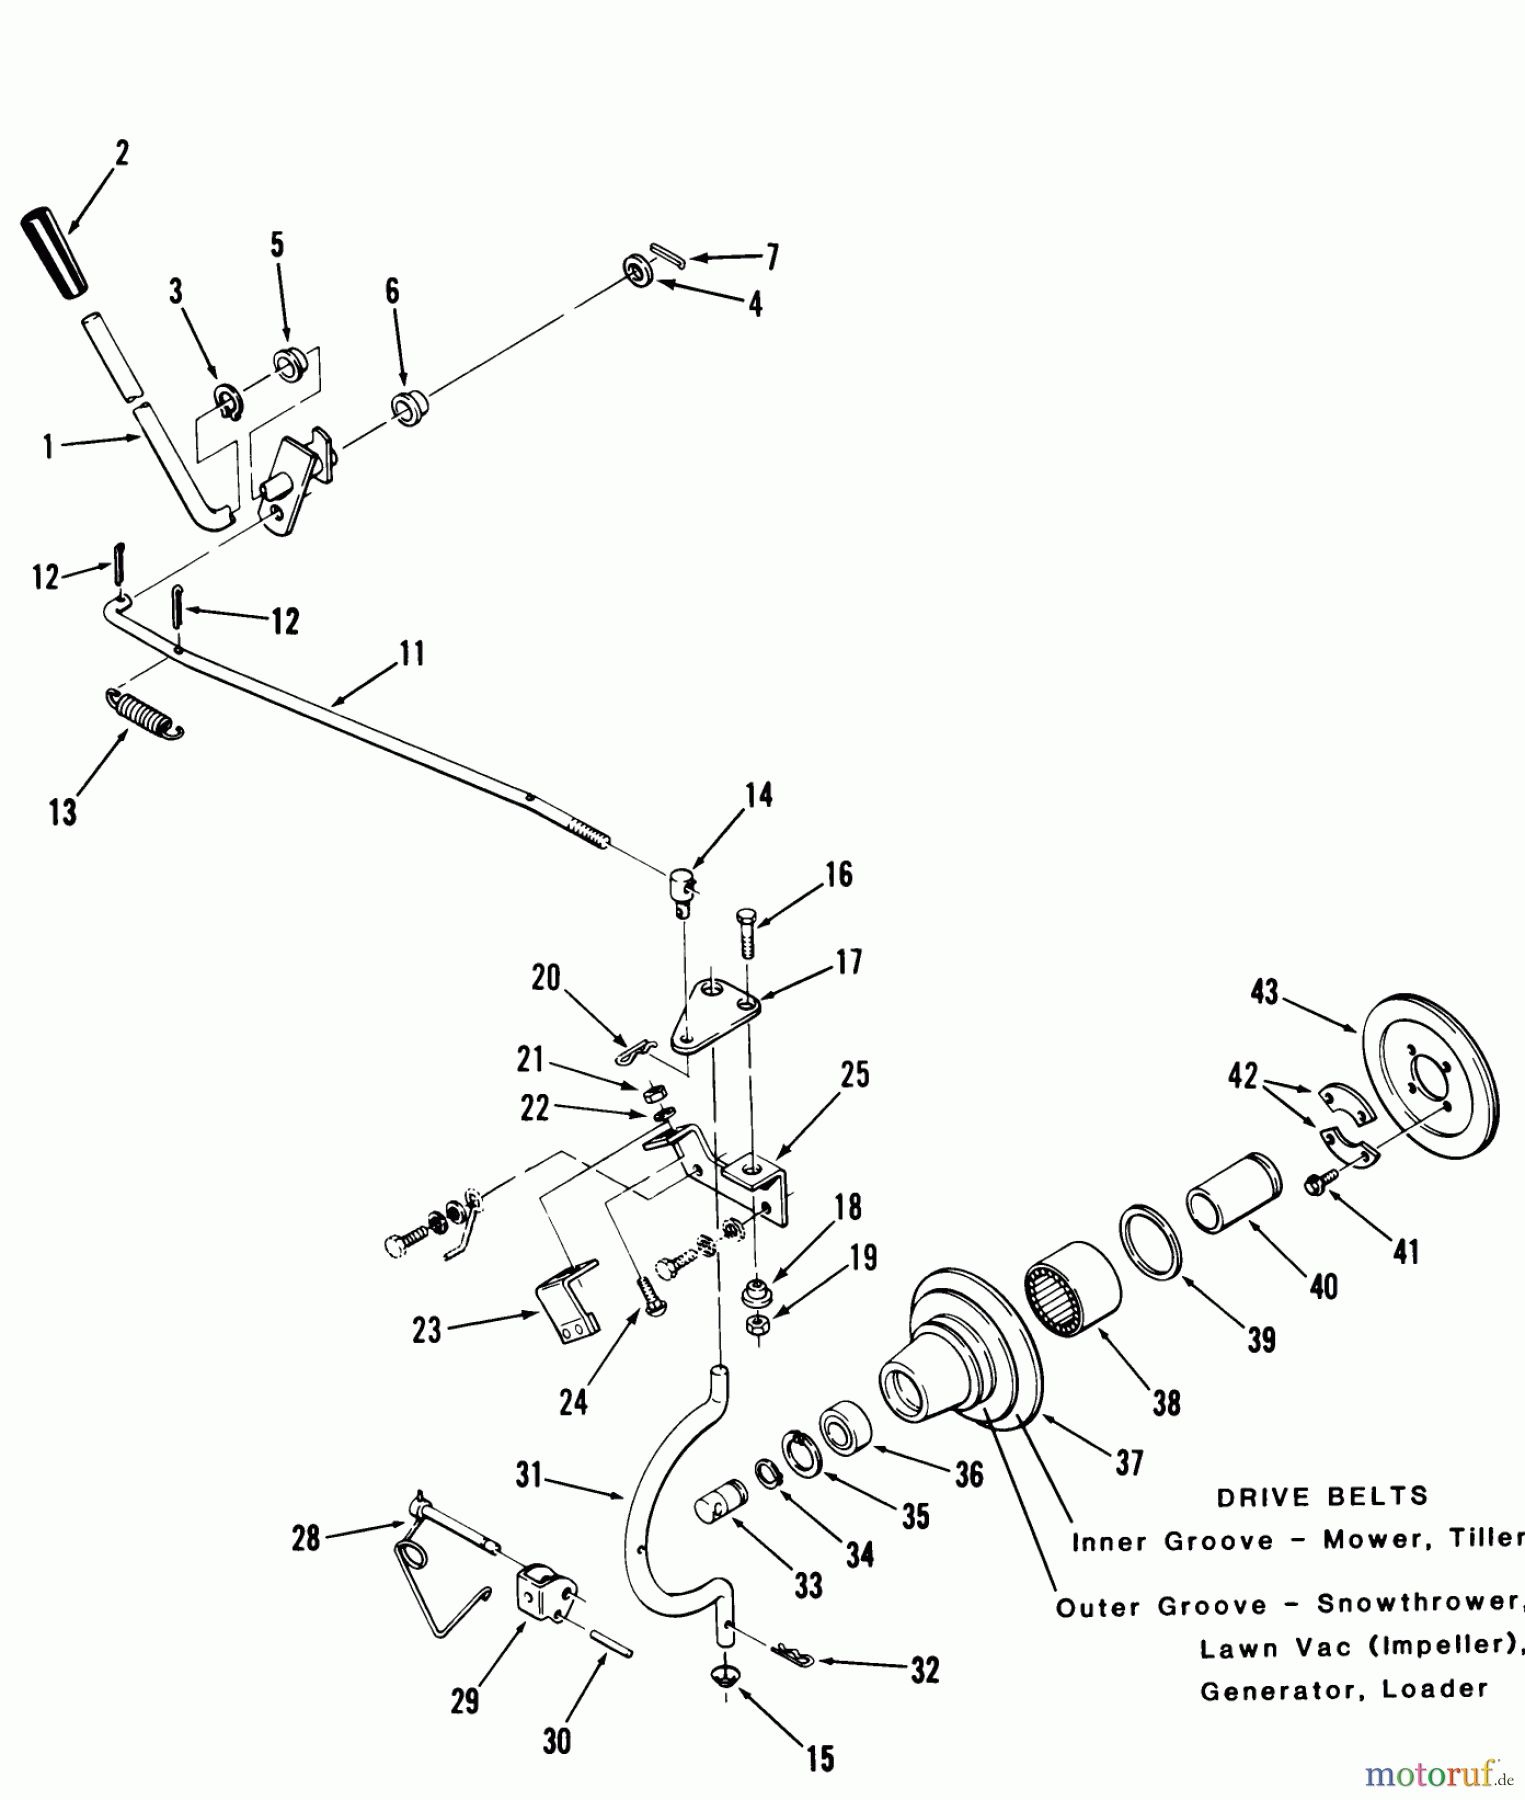  Toro Neu Mowers, Lawn & Garden Tractor Seite 1 11-12K802 (C-125) - Toro C-125 8-Speed Tractor, 1984 PTO CLUTCH AND CONTROL